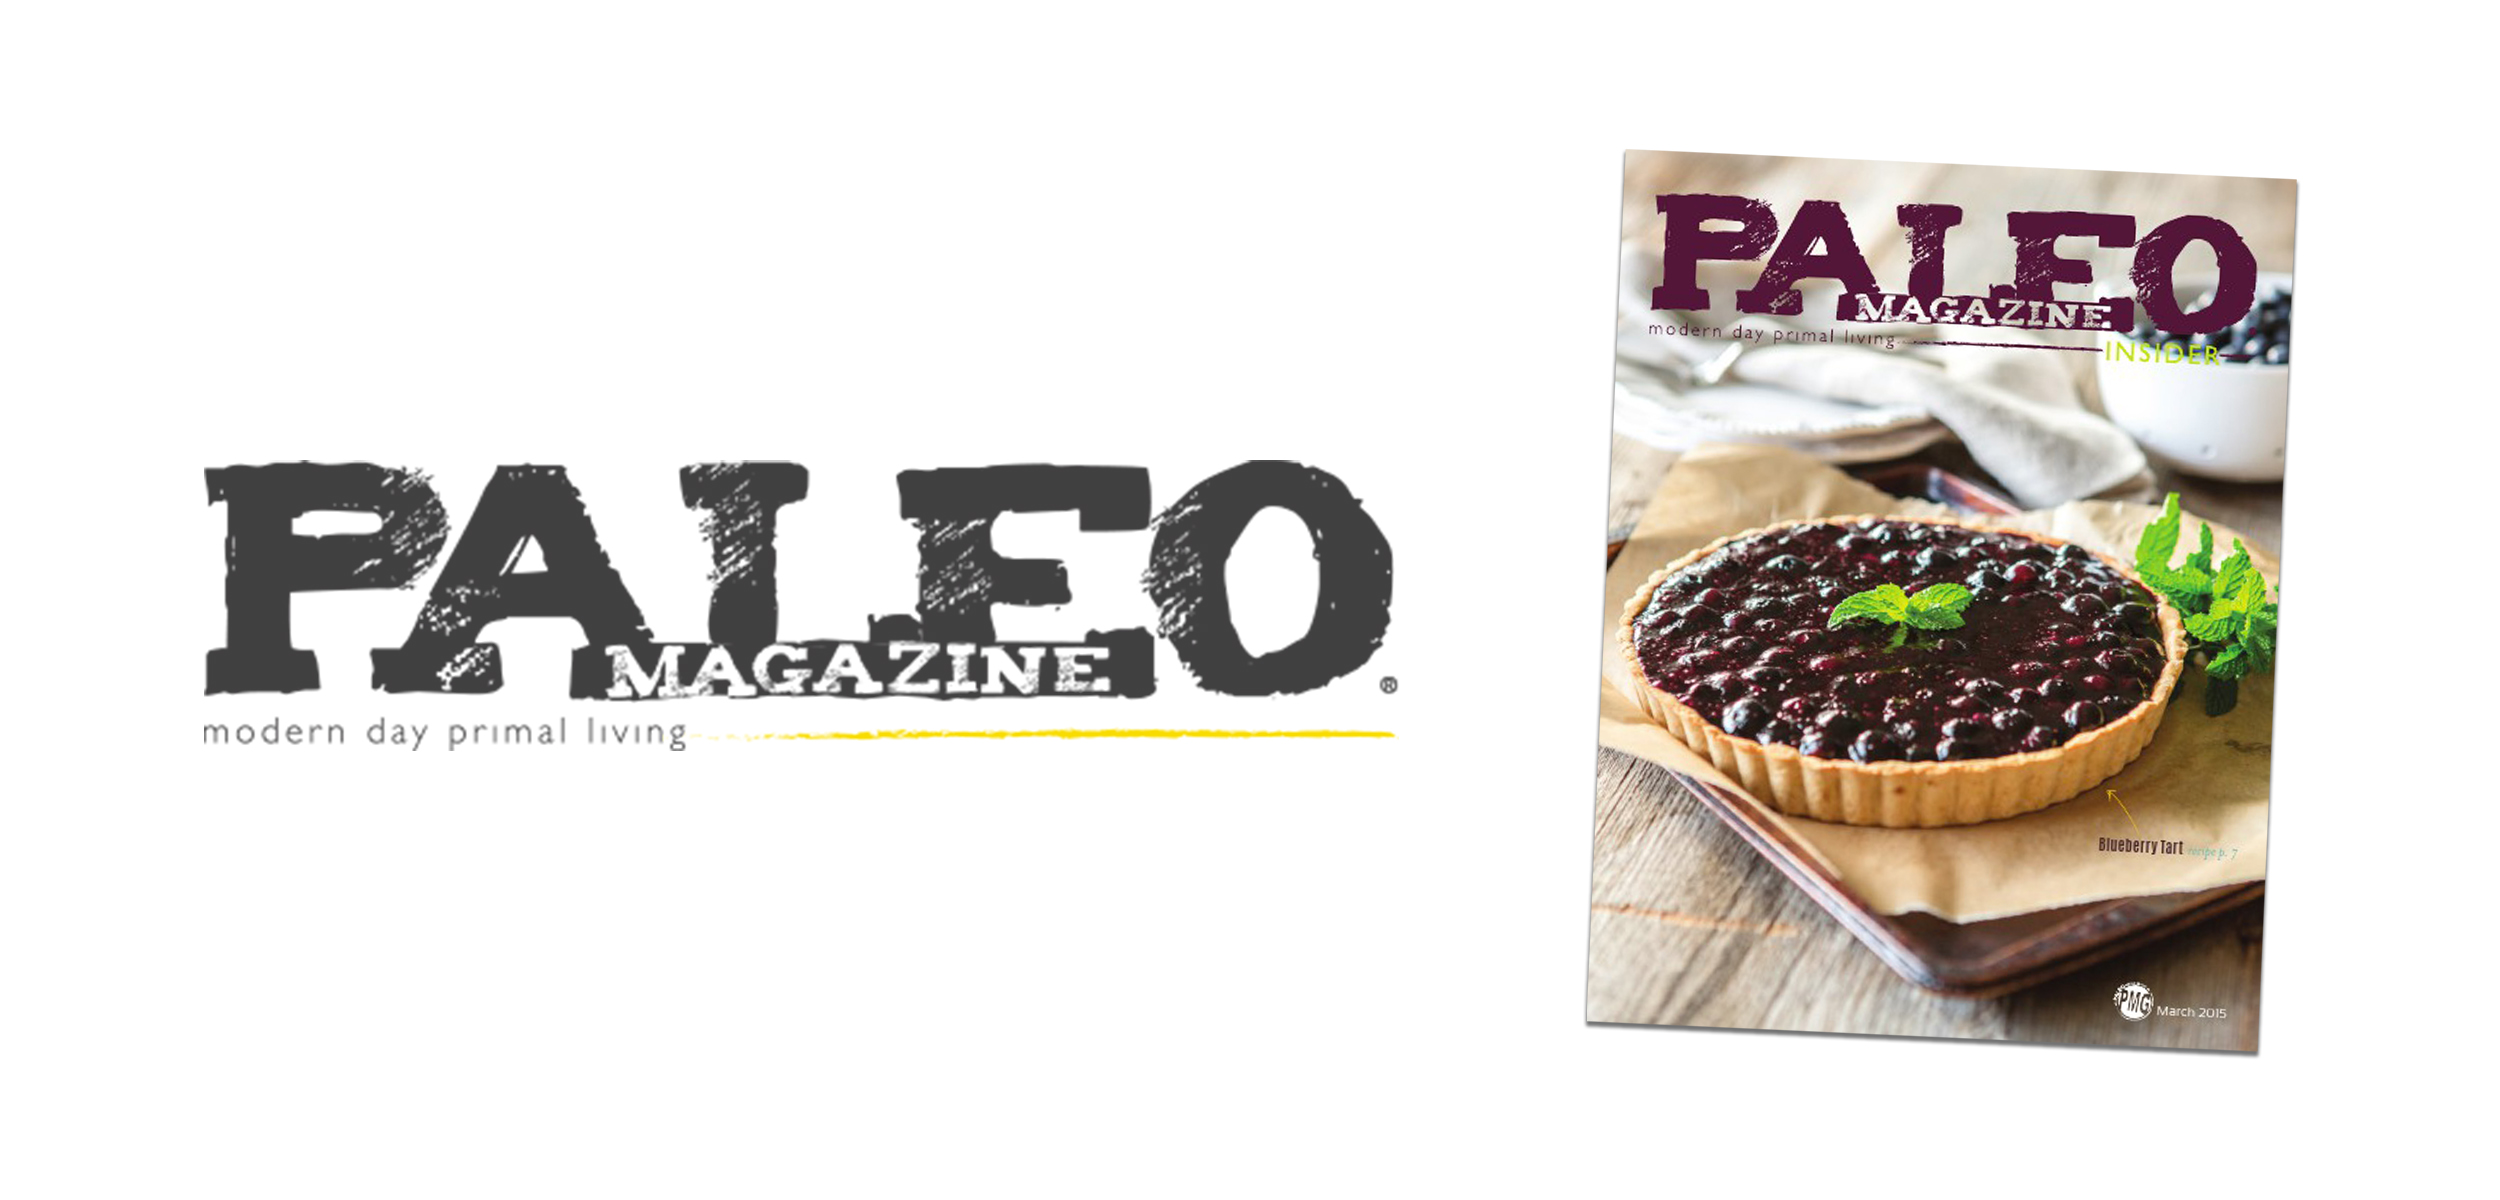 Paleo Magazine Ad